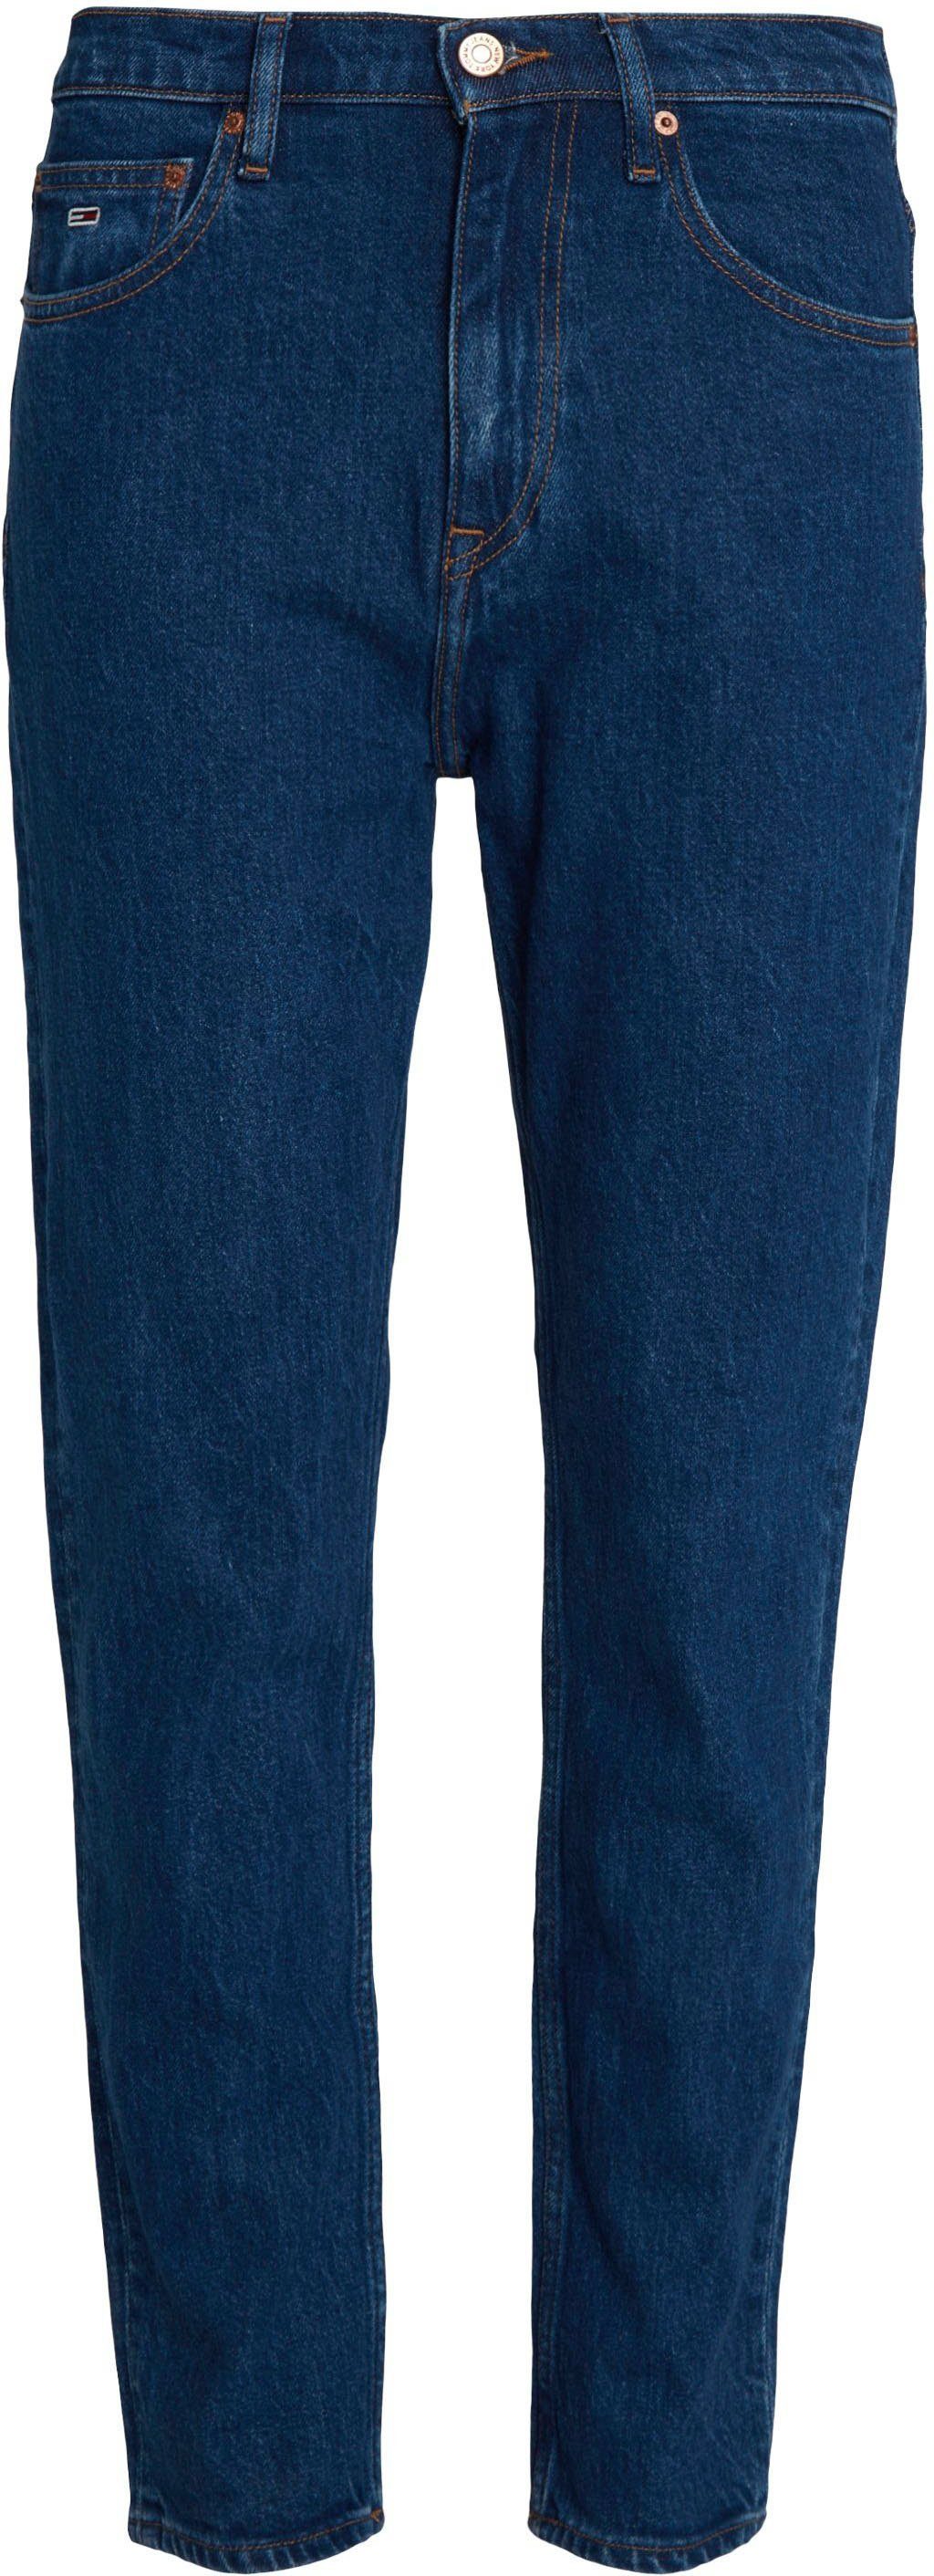 mit HGH Jeans Ledermarkenlabel blue30 SL ANK IZZIE Slim-fit-Jeans BH5131 dark Tommy